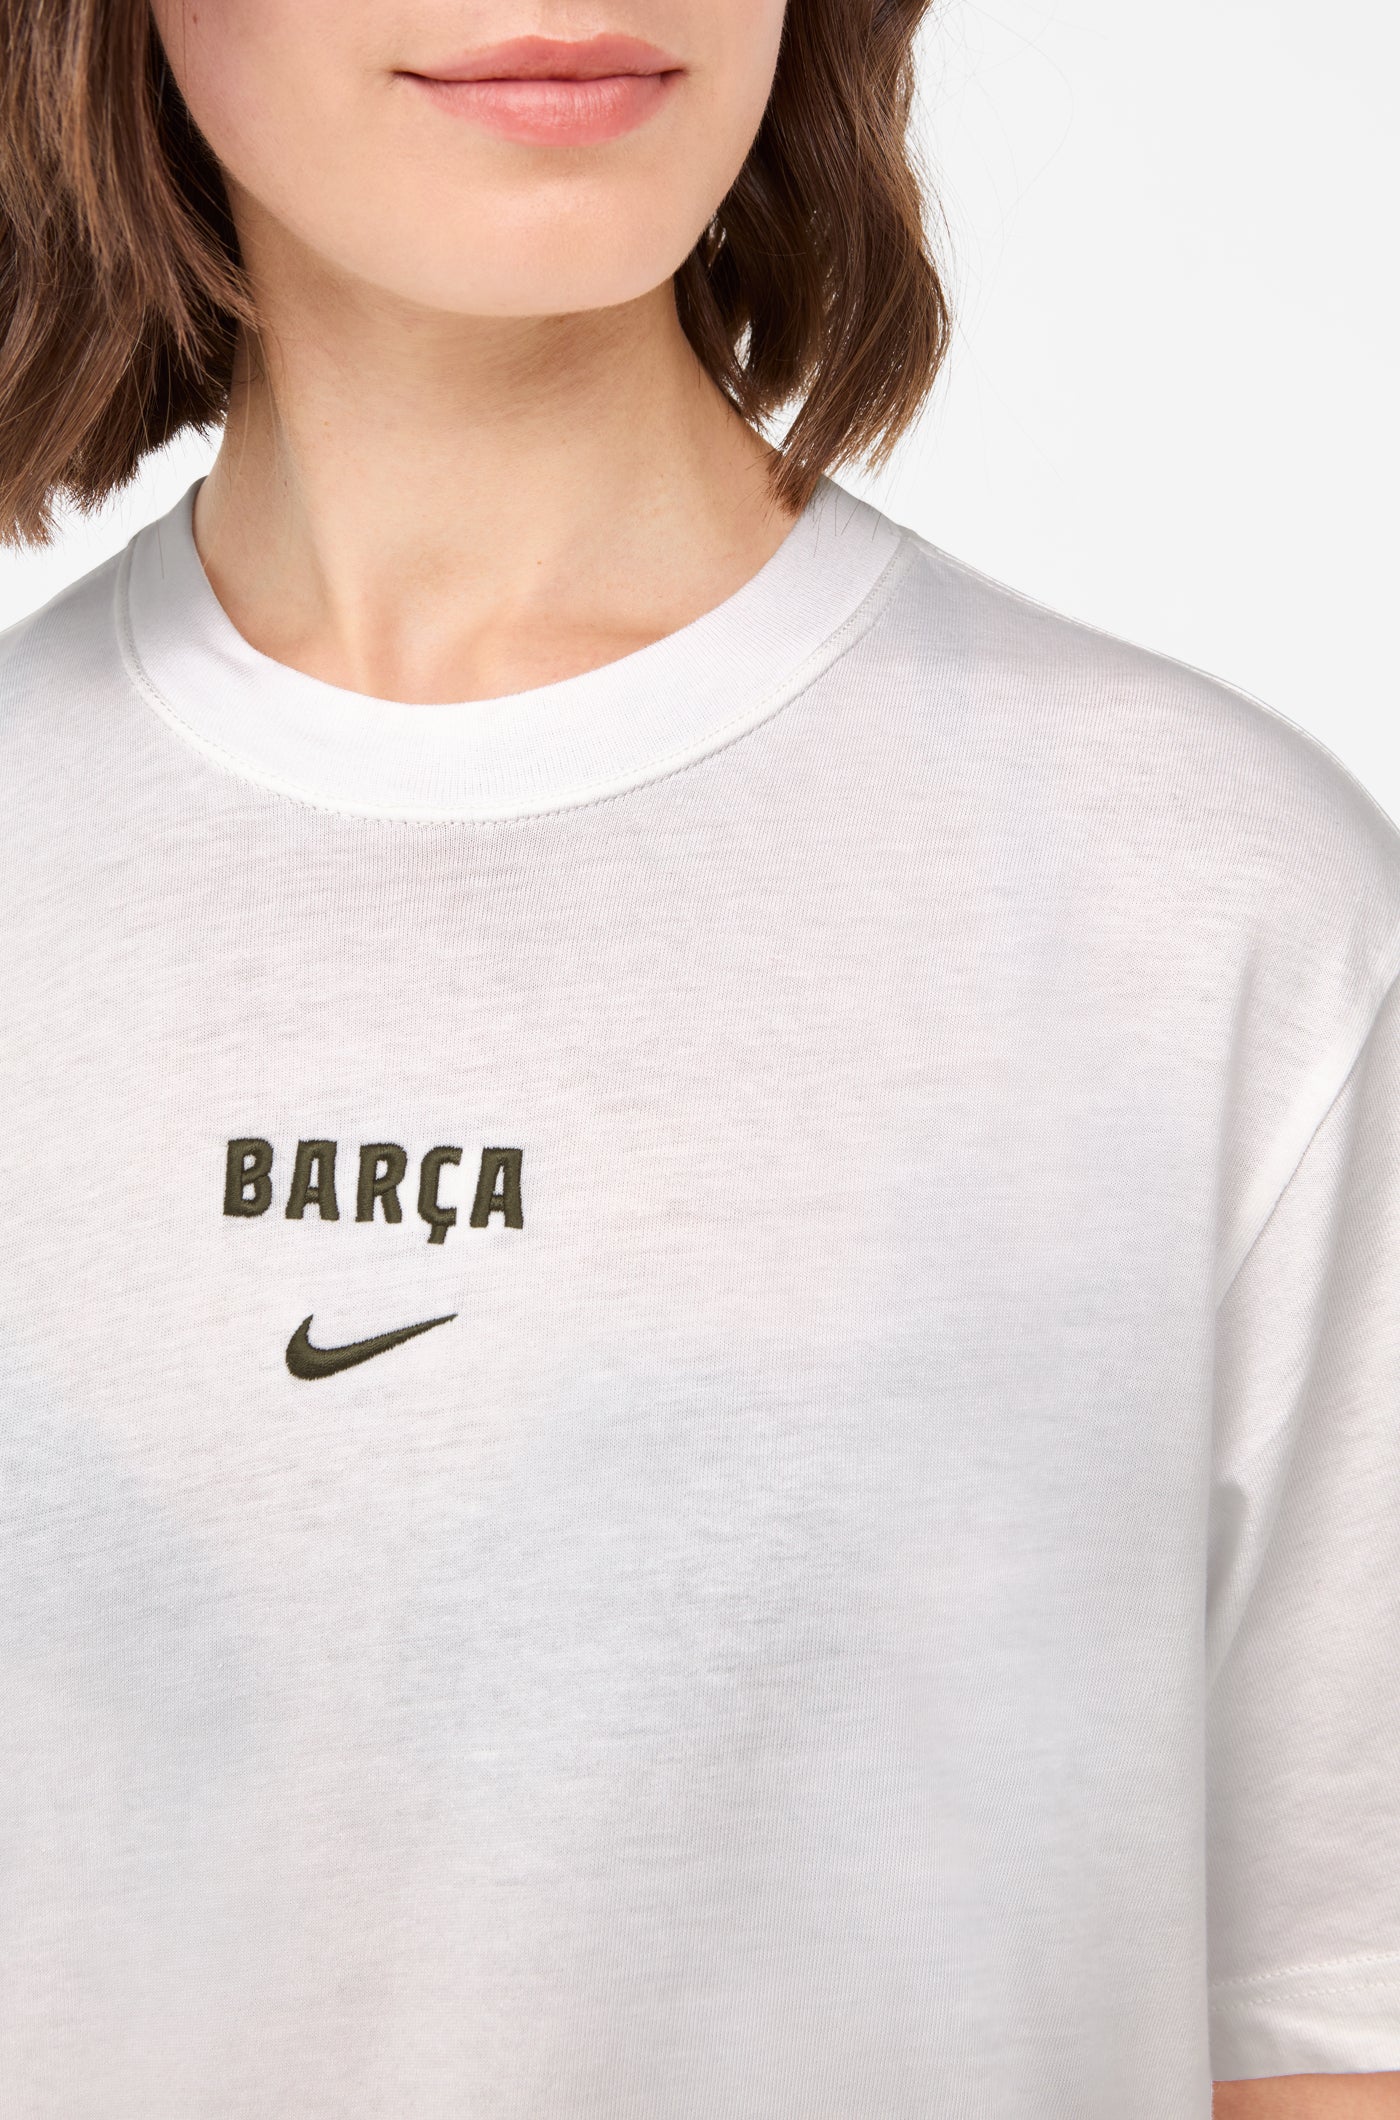 T-shirt short sleeve white Barça Nike - Women